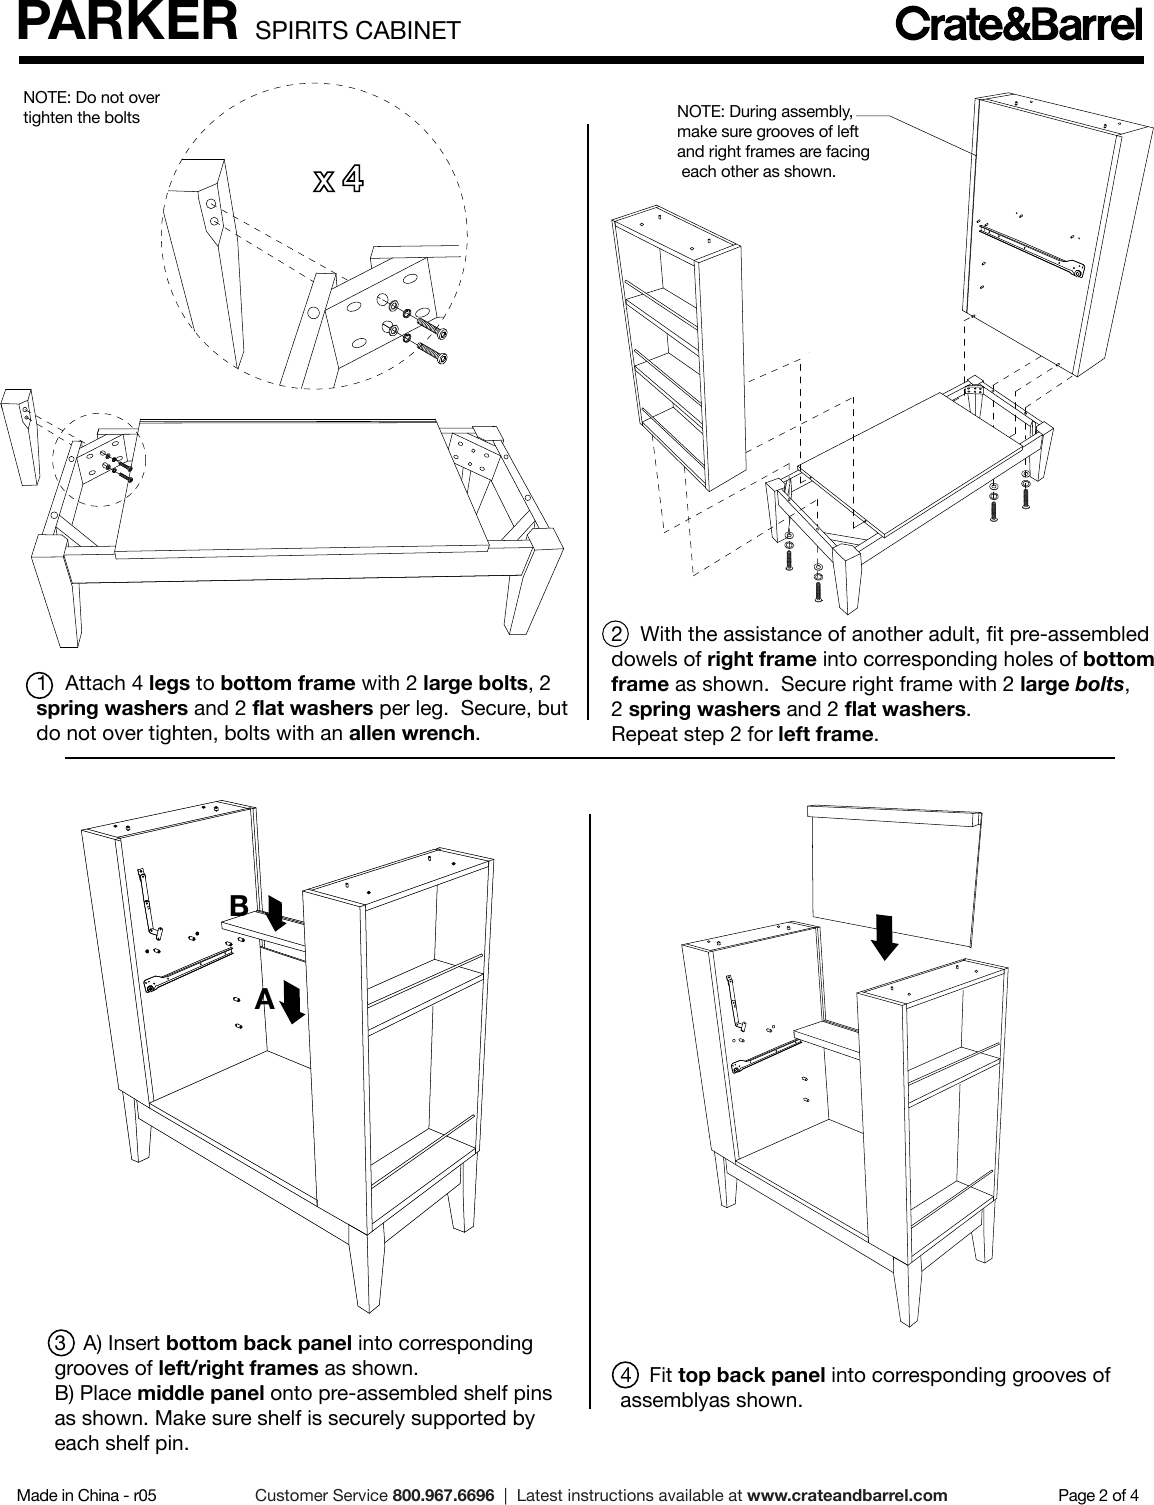 Page 2 of 4 - Crate-Barrel 760-Parker-Spirits-Cabinet